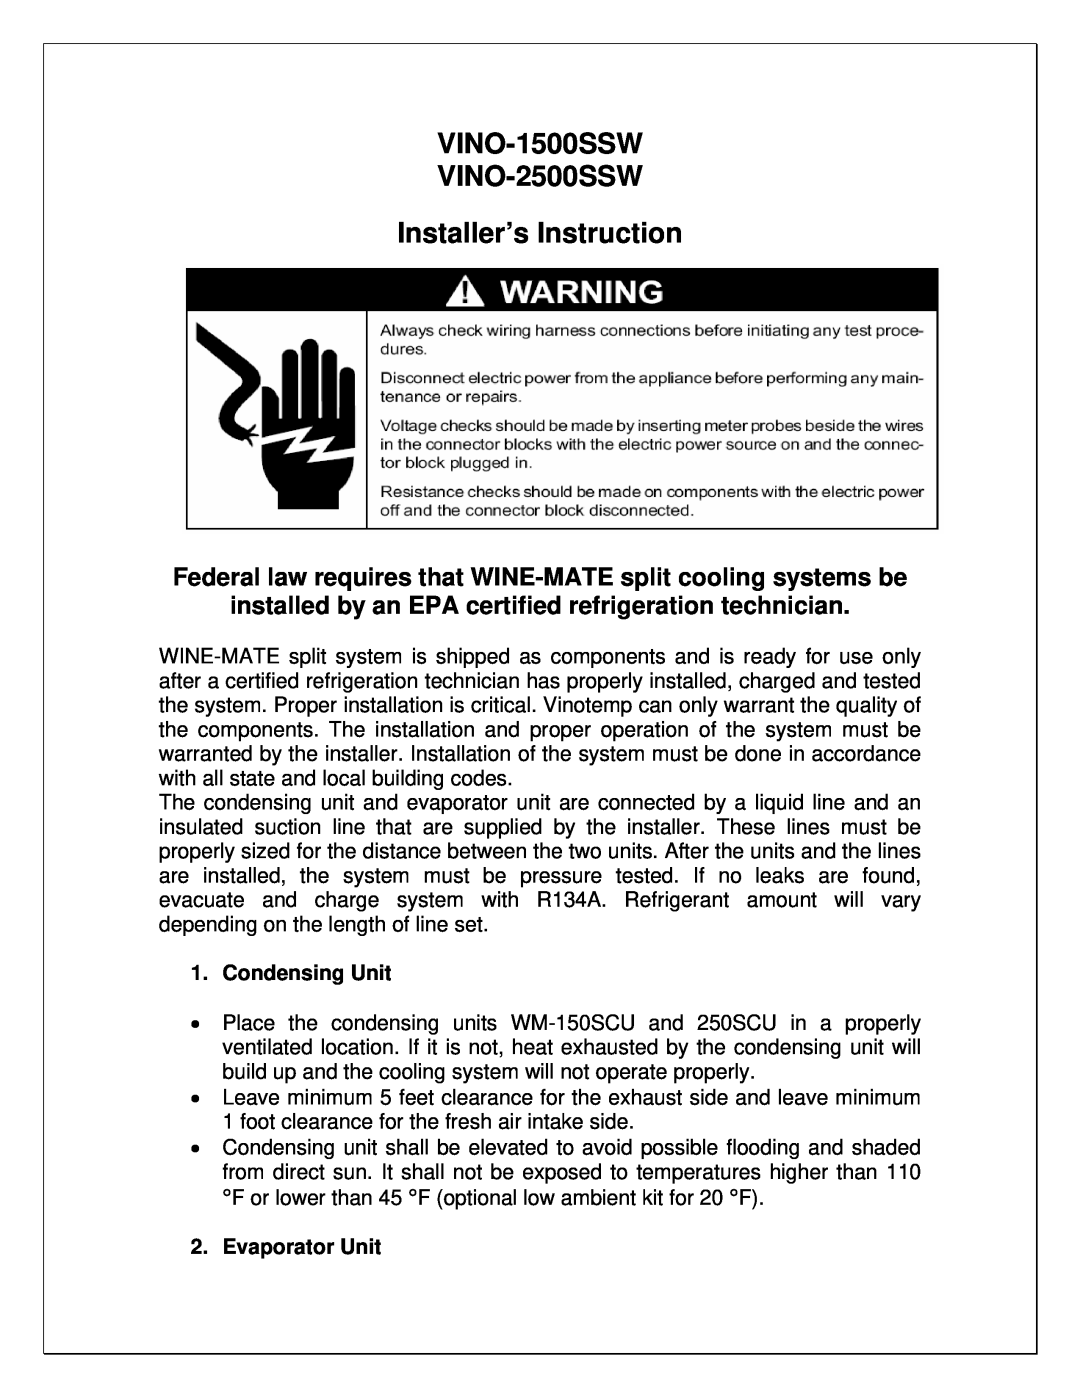 Vinotemp 250SCU manual VINO-1500SSW VINO-2500SSW Installer’s Instruction, Condensing Unit, Evaporator Unit 